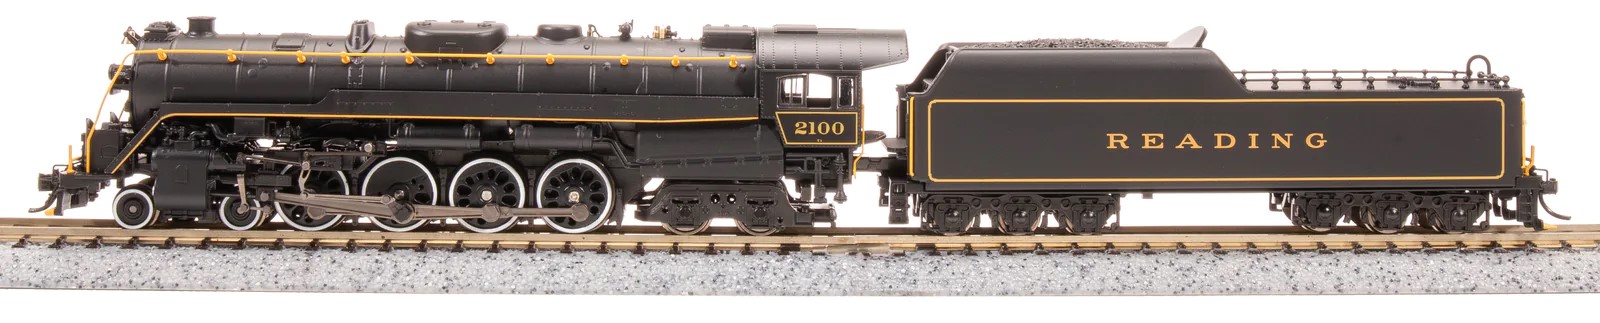 Broadway Limited Imports N 7405 Reading Class T-1 4-8-4 Locomotive Paragon4 Sound/DC/DCC/Smoke 'Iron Horse Rambles Excursion Version' RDG #2124